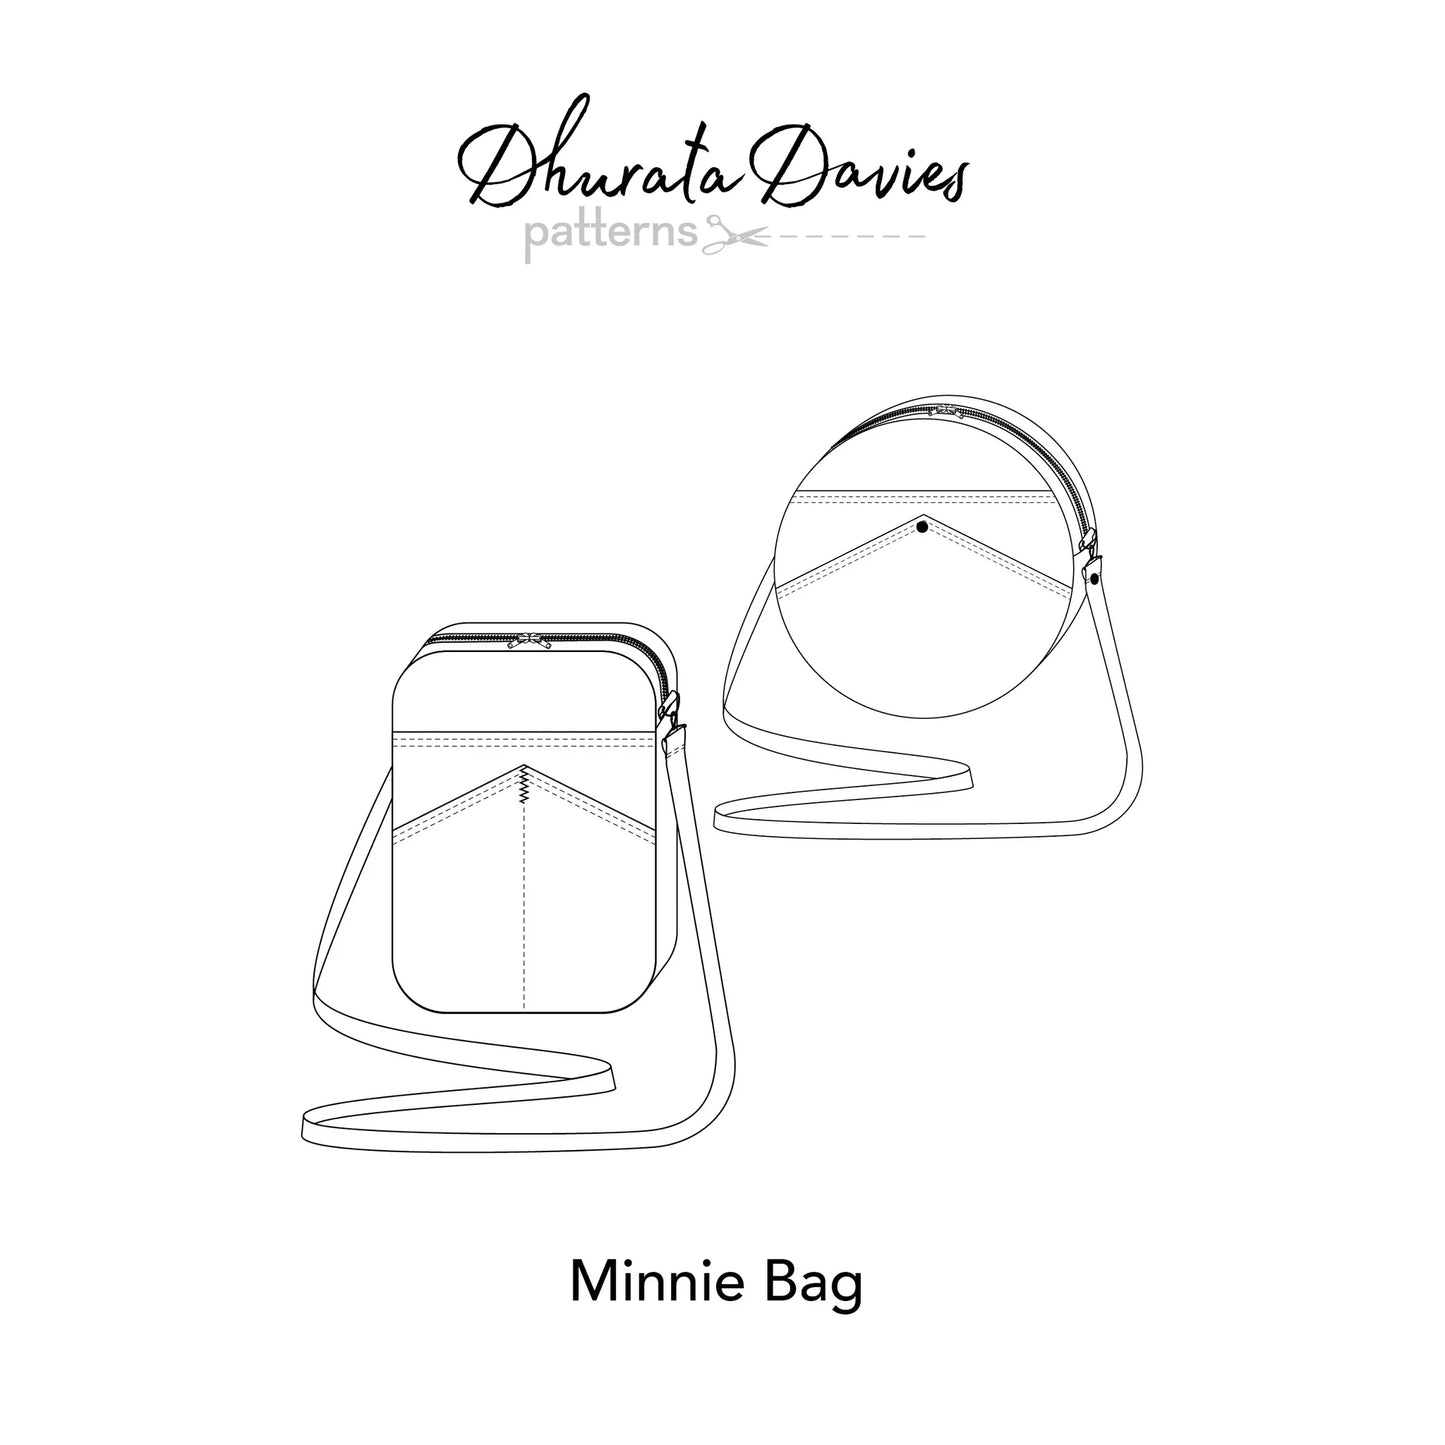 Minnie Bag Sewing Pattern - Dhurata Davies